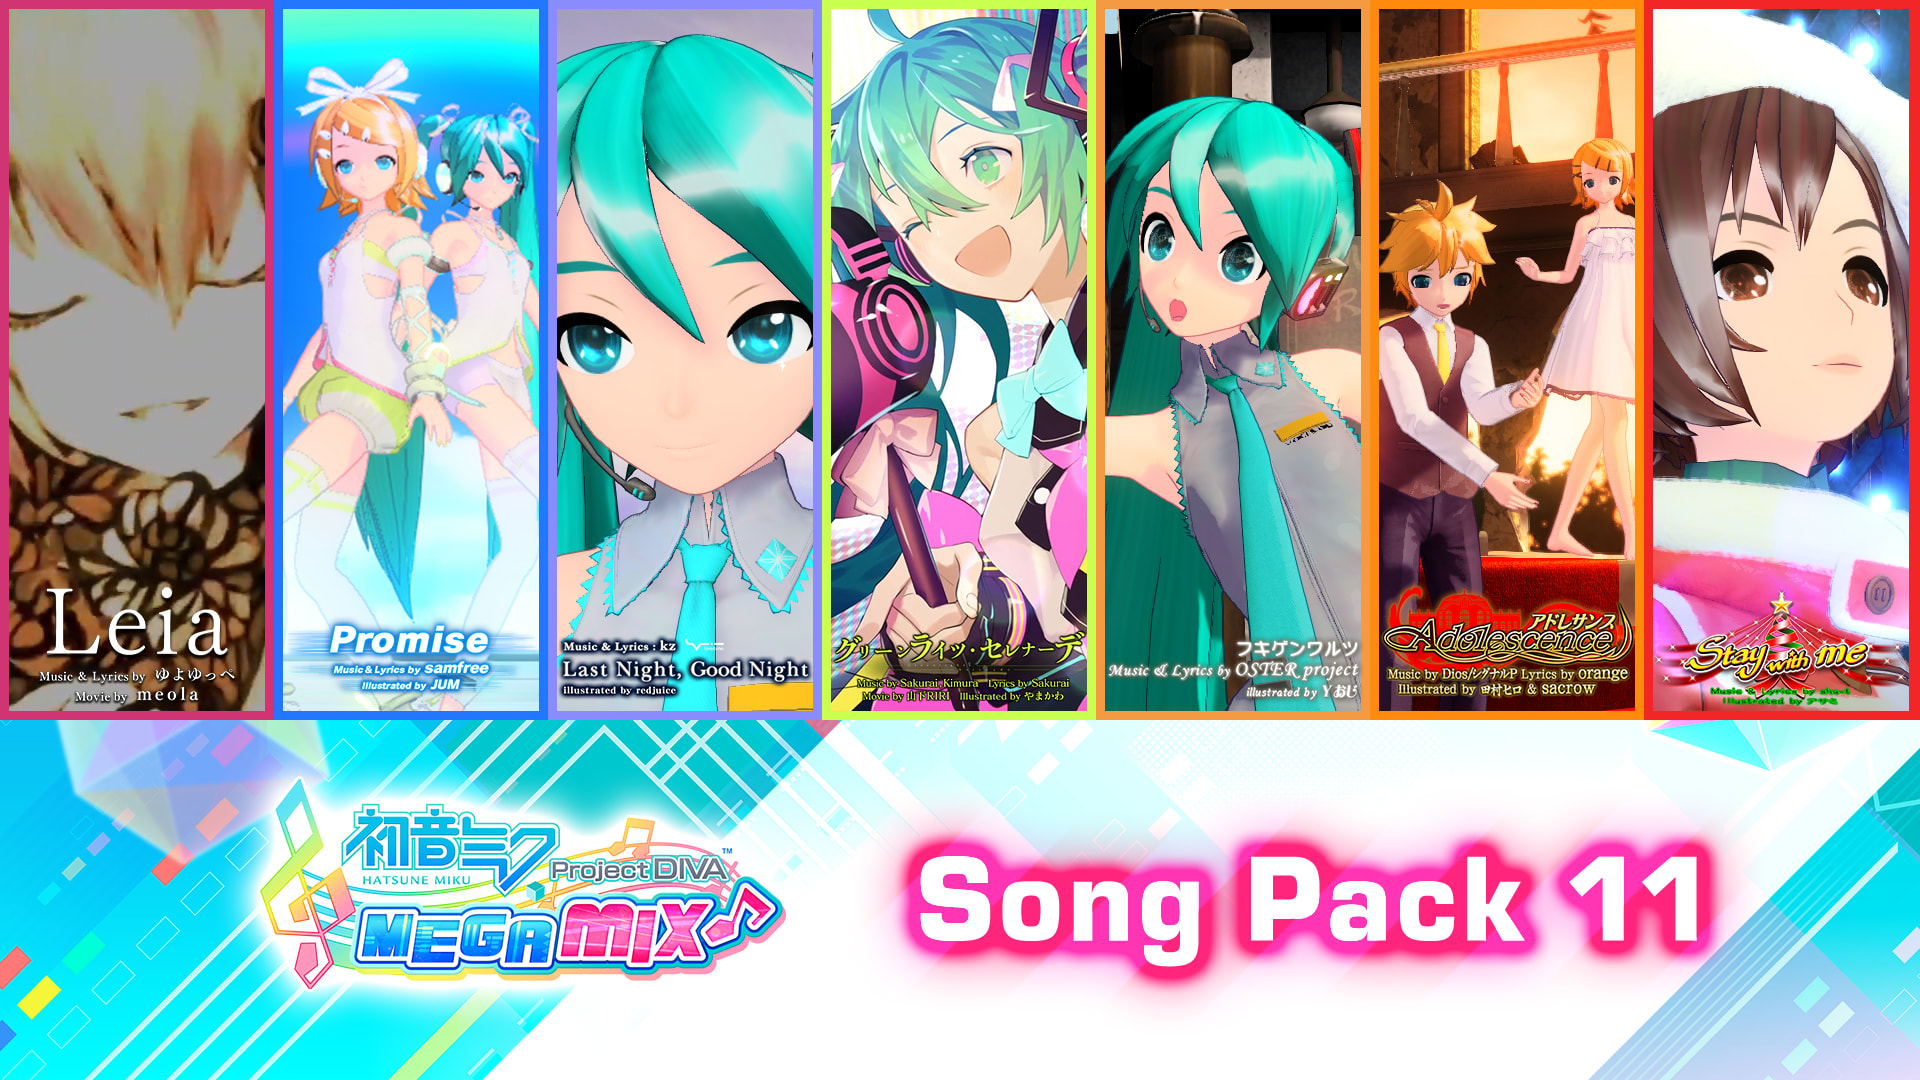 Hatsune Miku: Project DIVA Mega Mix Song Pack 11